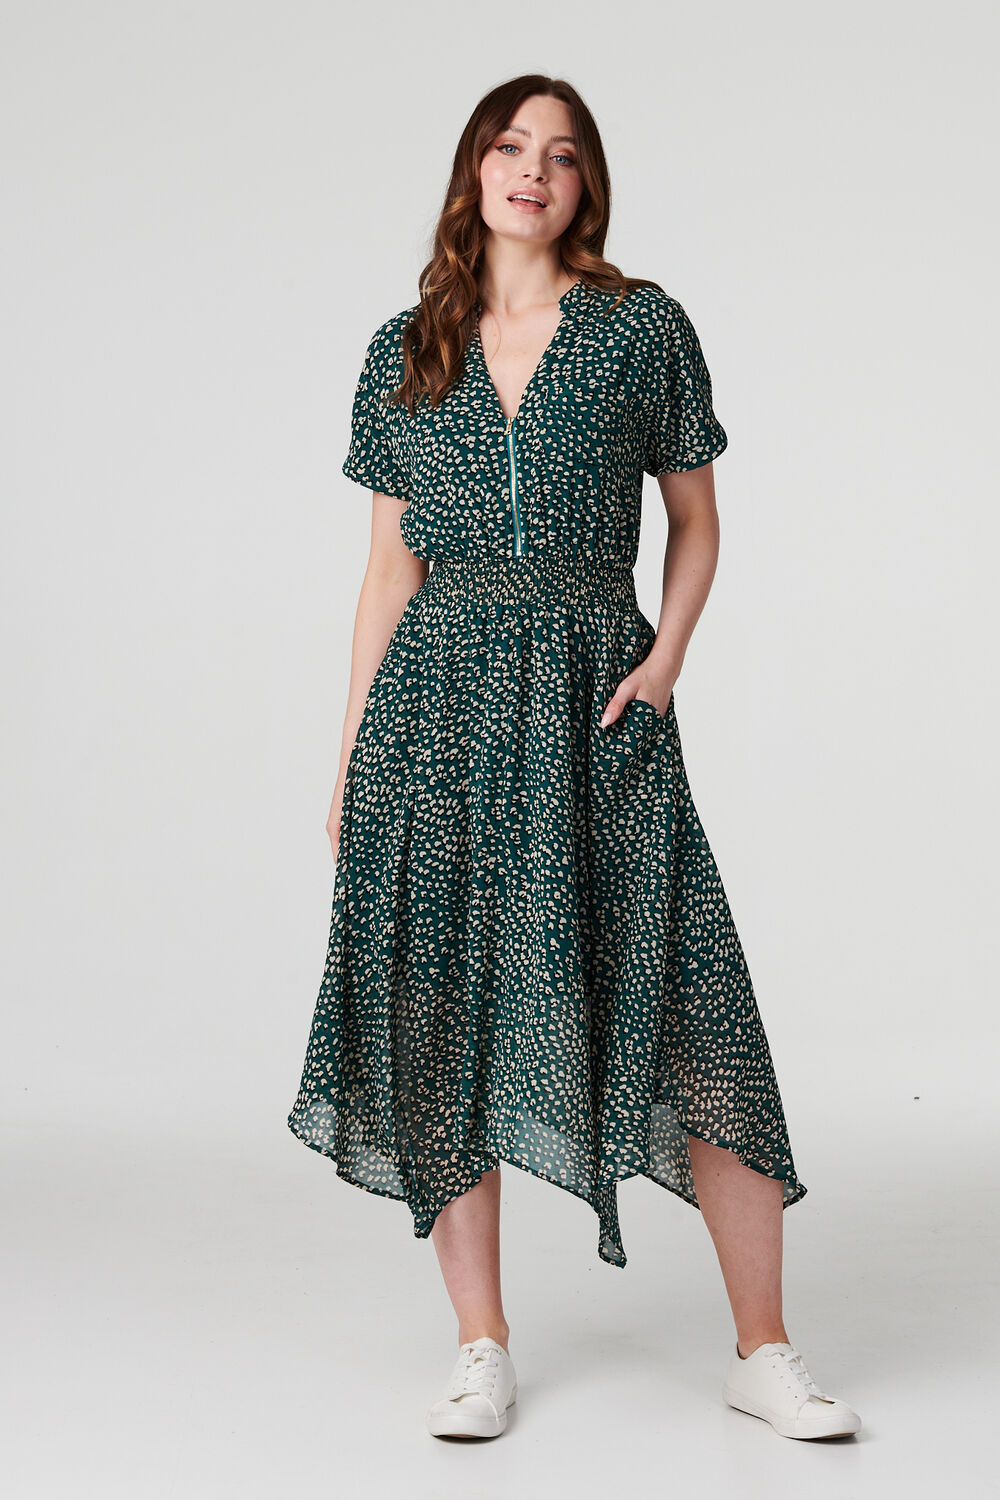 Izabel London Green - Printed Zip Front Hanky Hem Dress, Size: 12